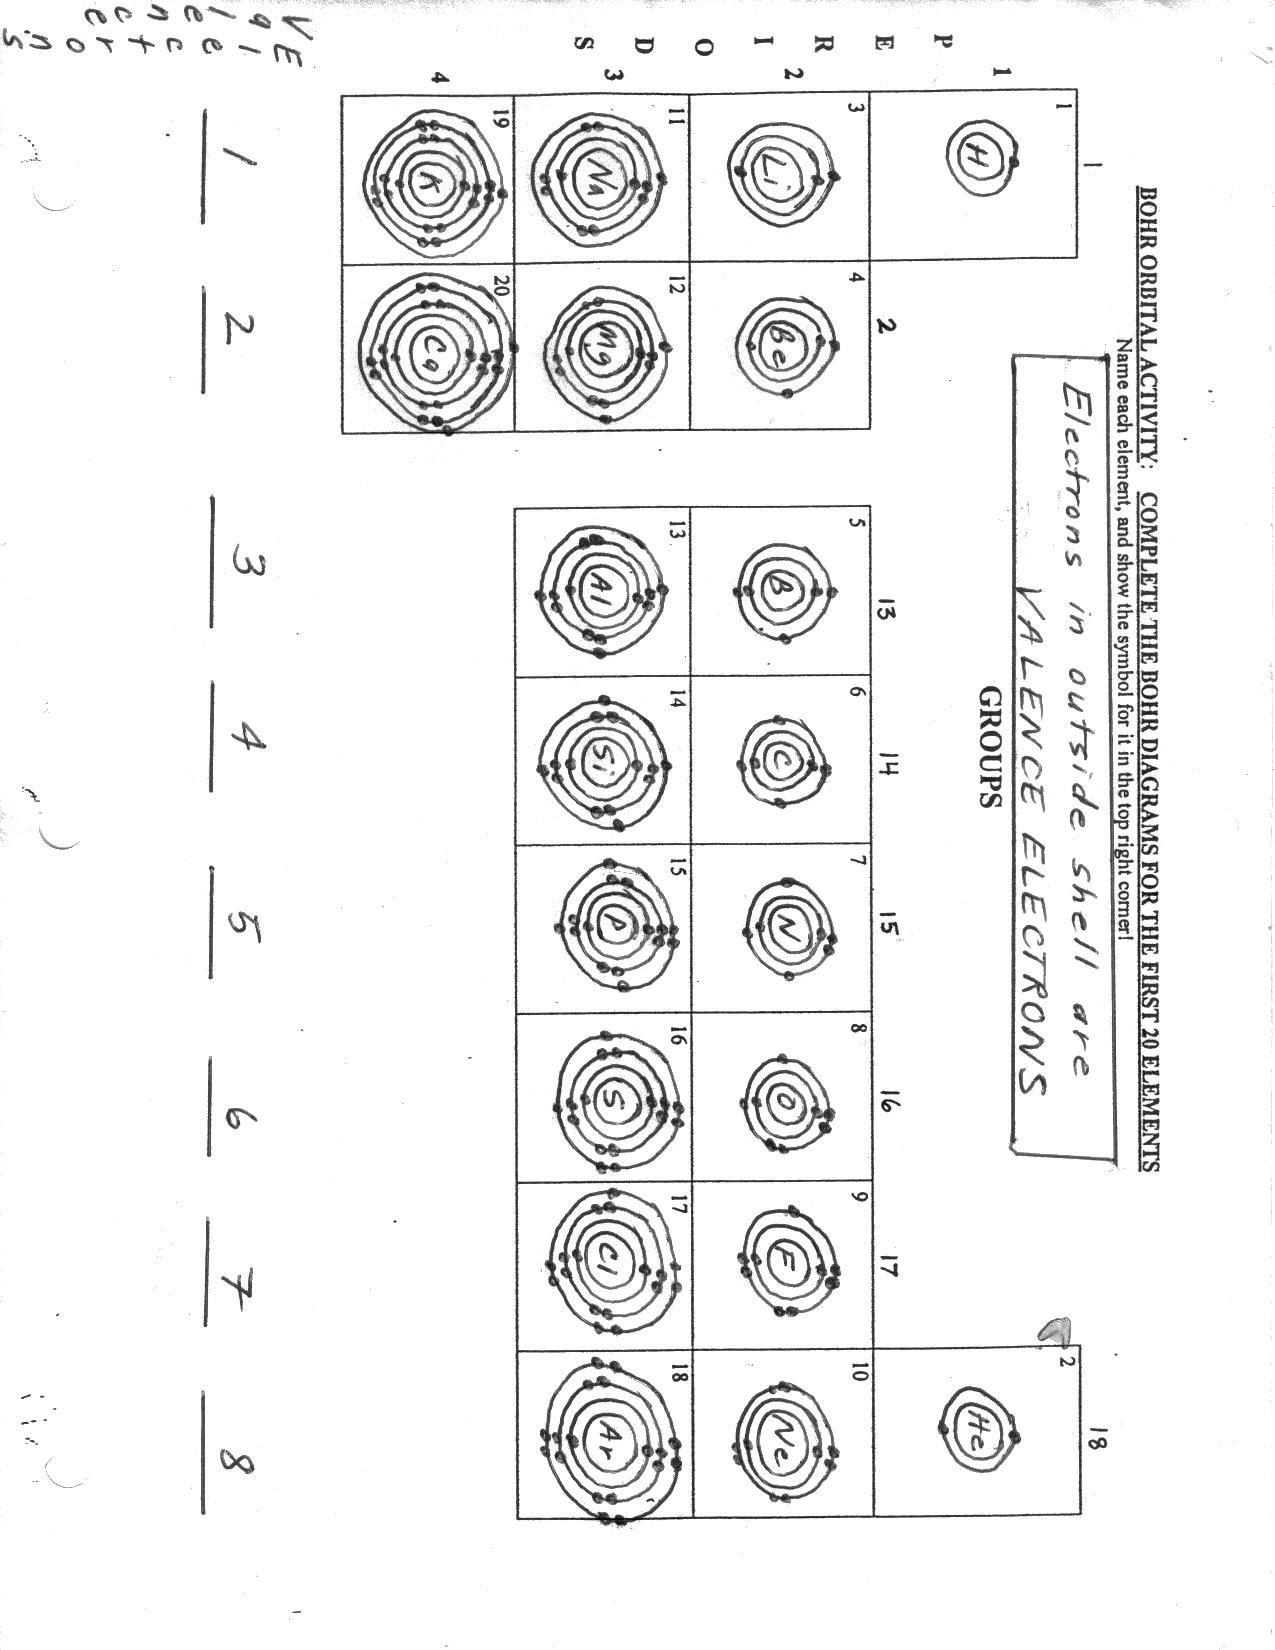 Bohr atomic Models Worksheet Answers 30 Bohr Model Diagrams Worksheet Answers Worksheet